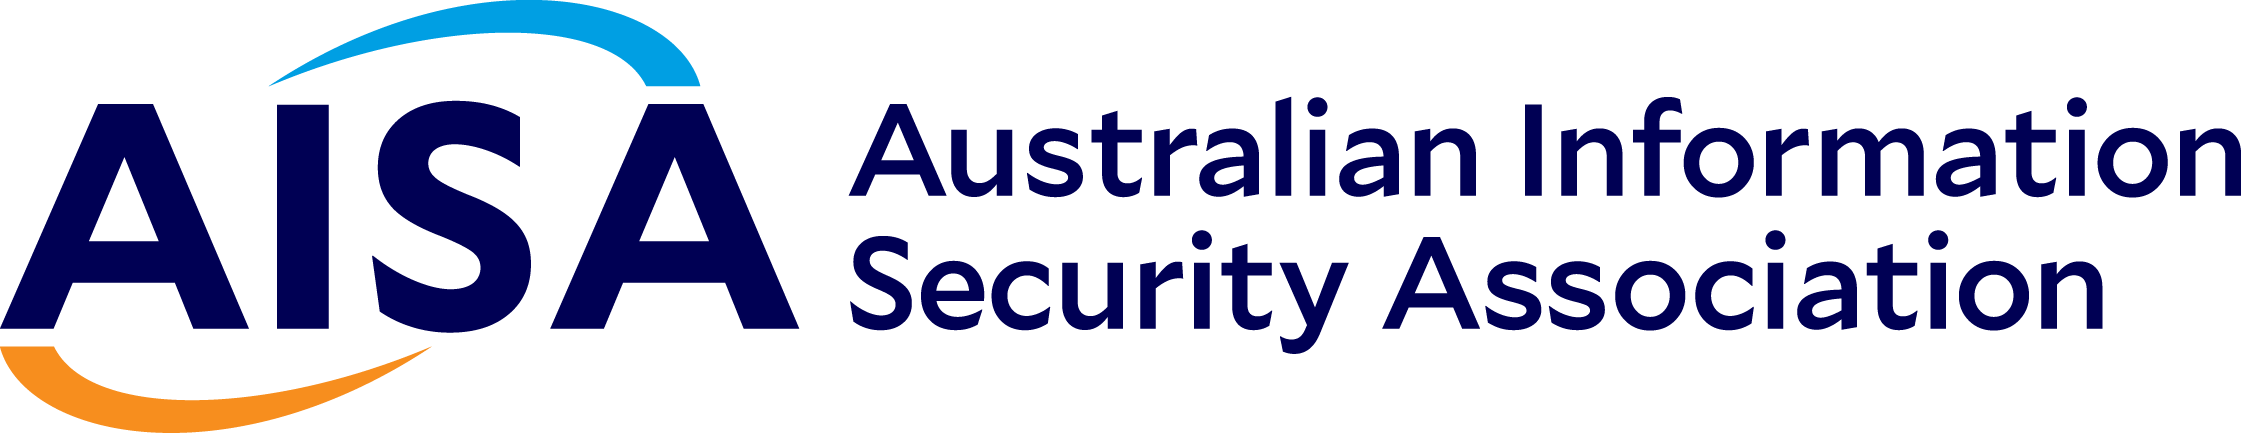 AISA(Australian Information Security Association) 로고